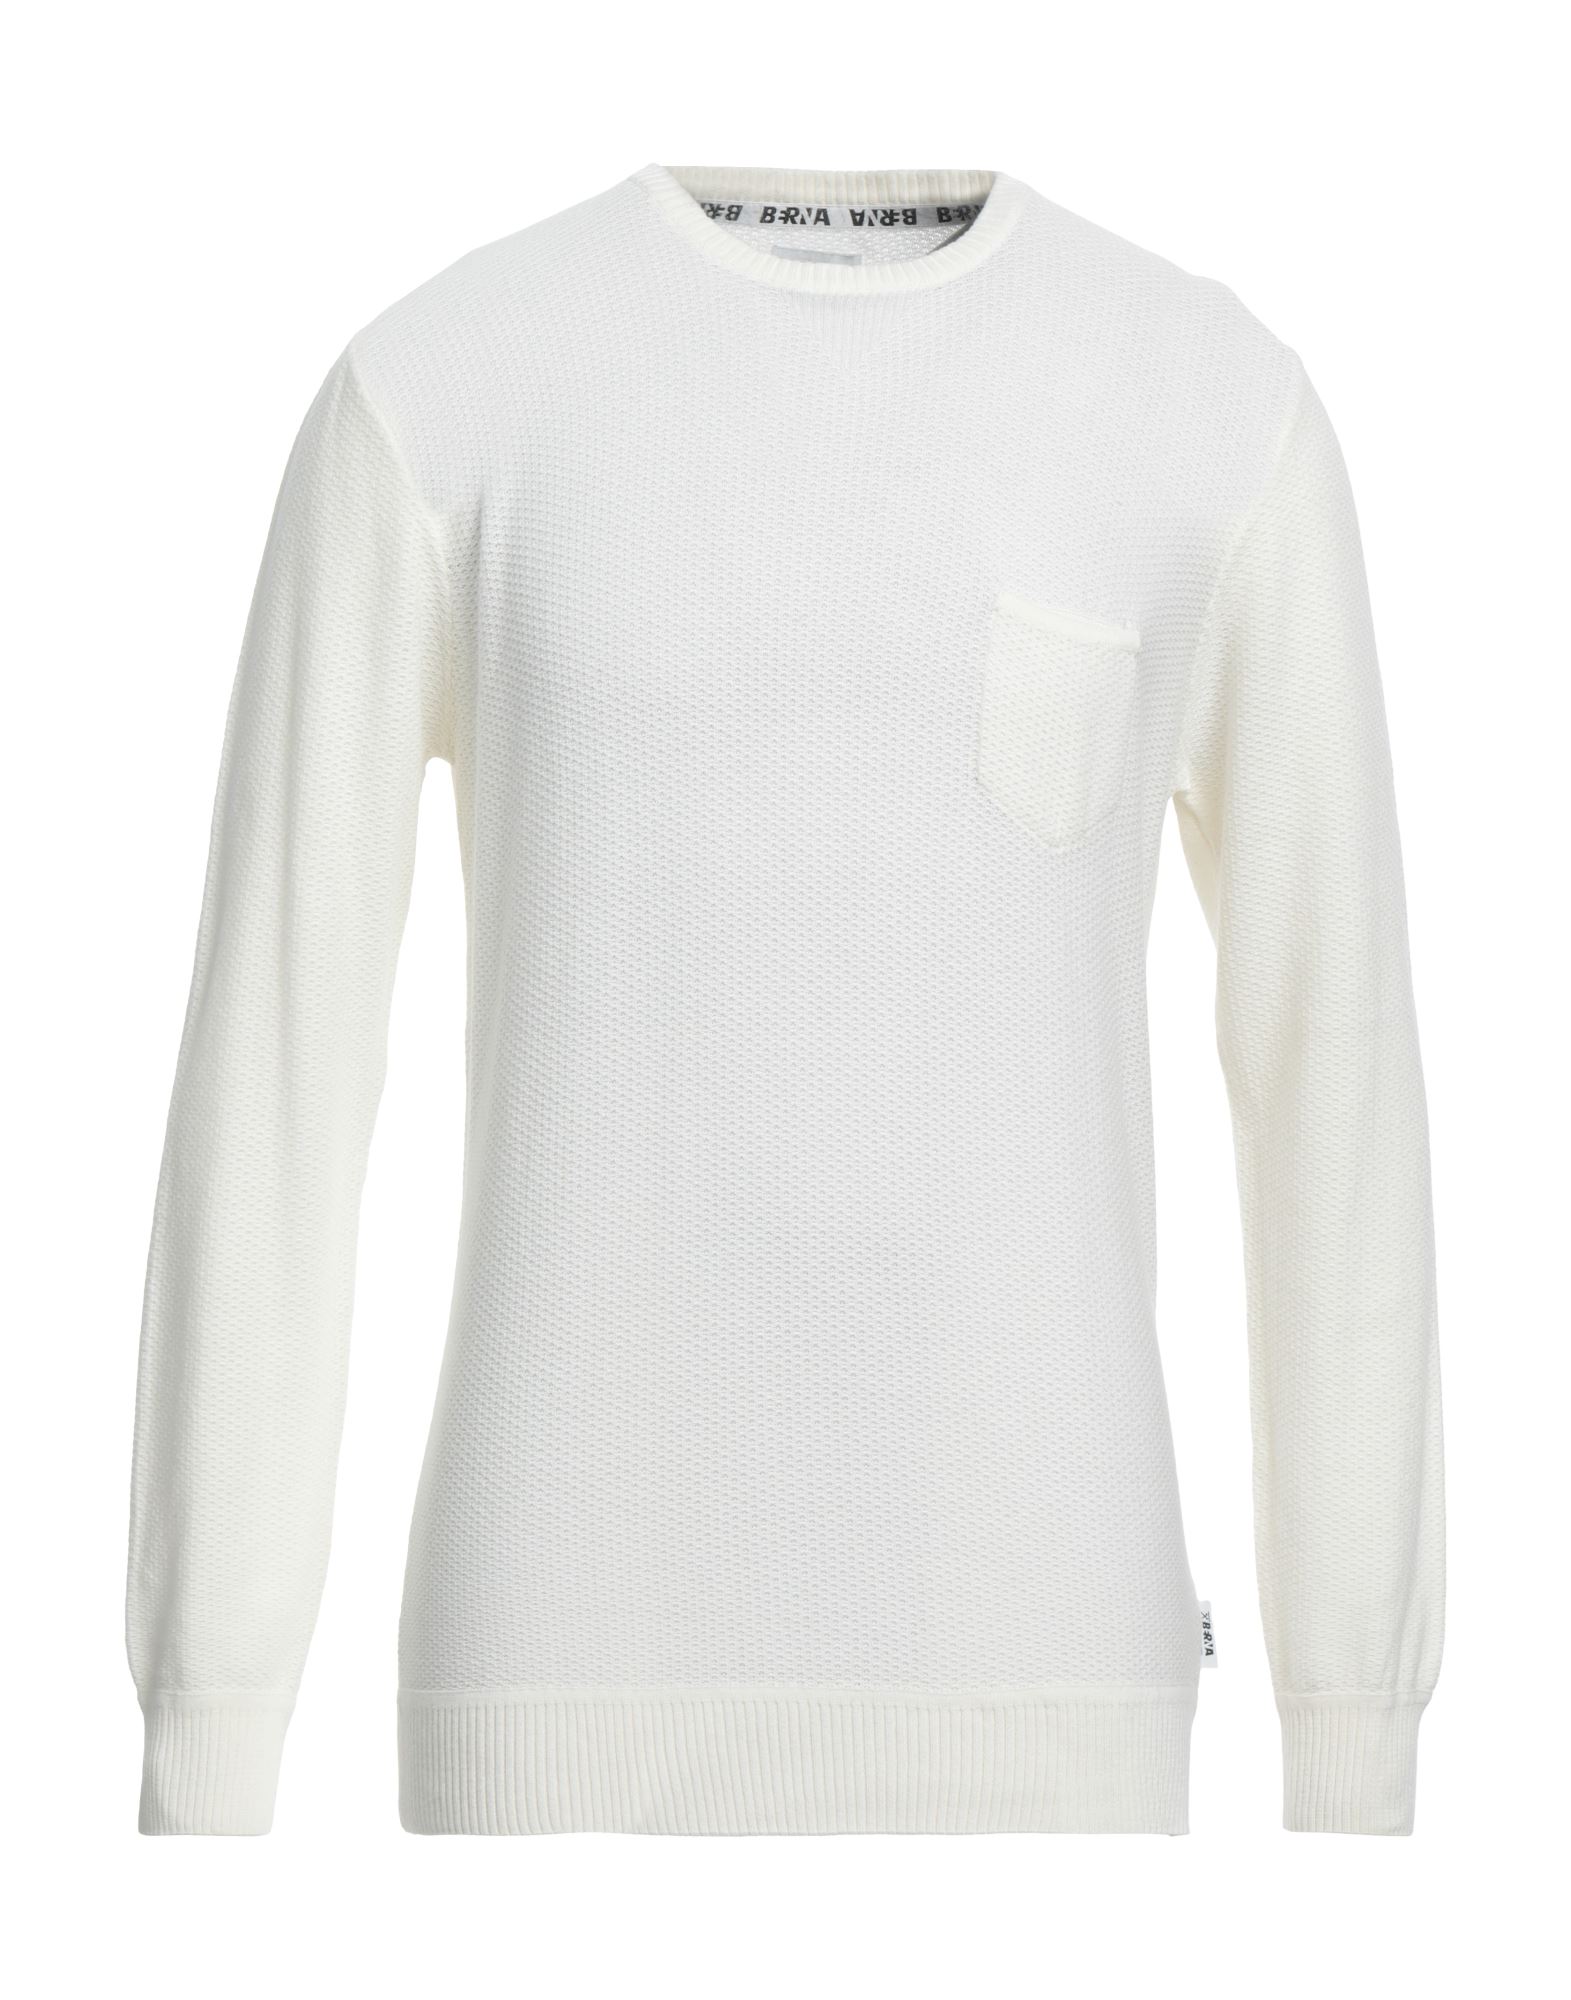 Berna Sweaters In White